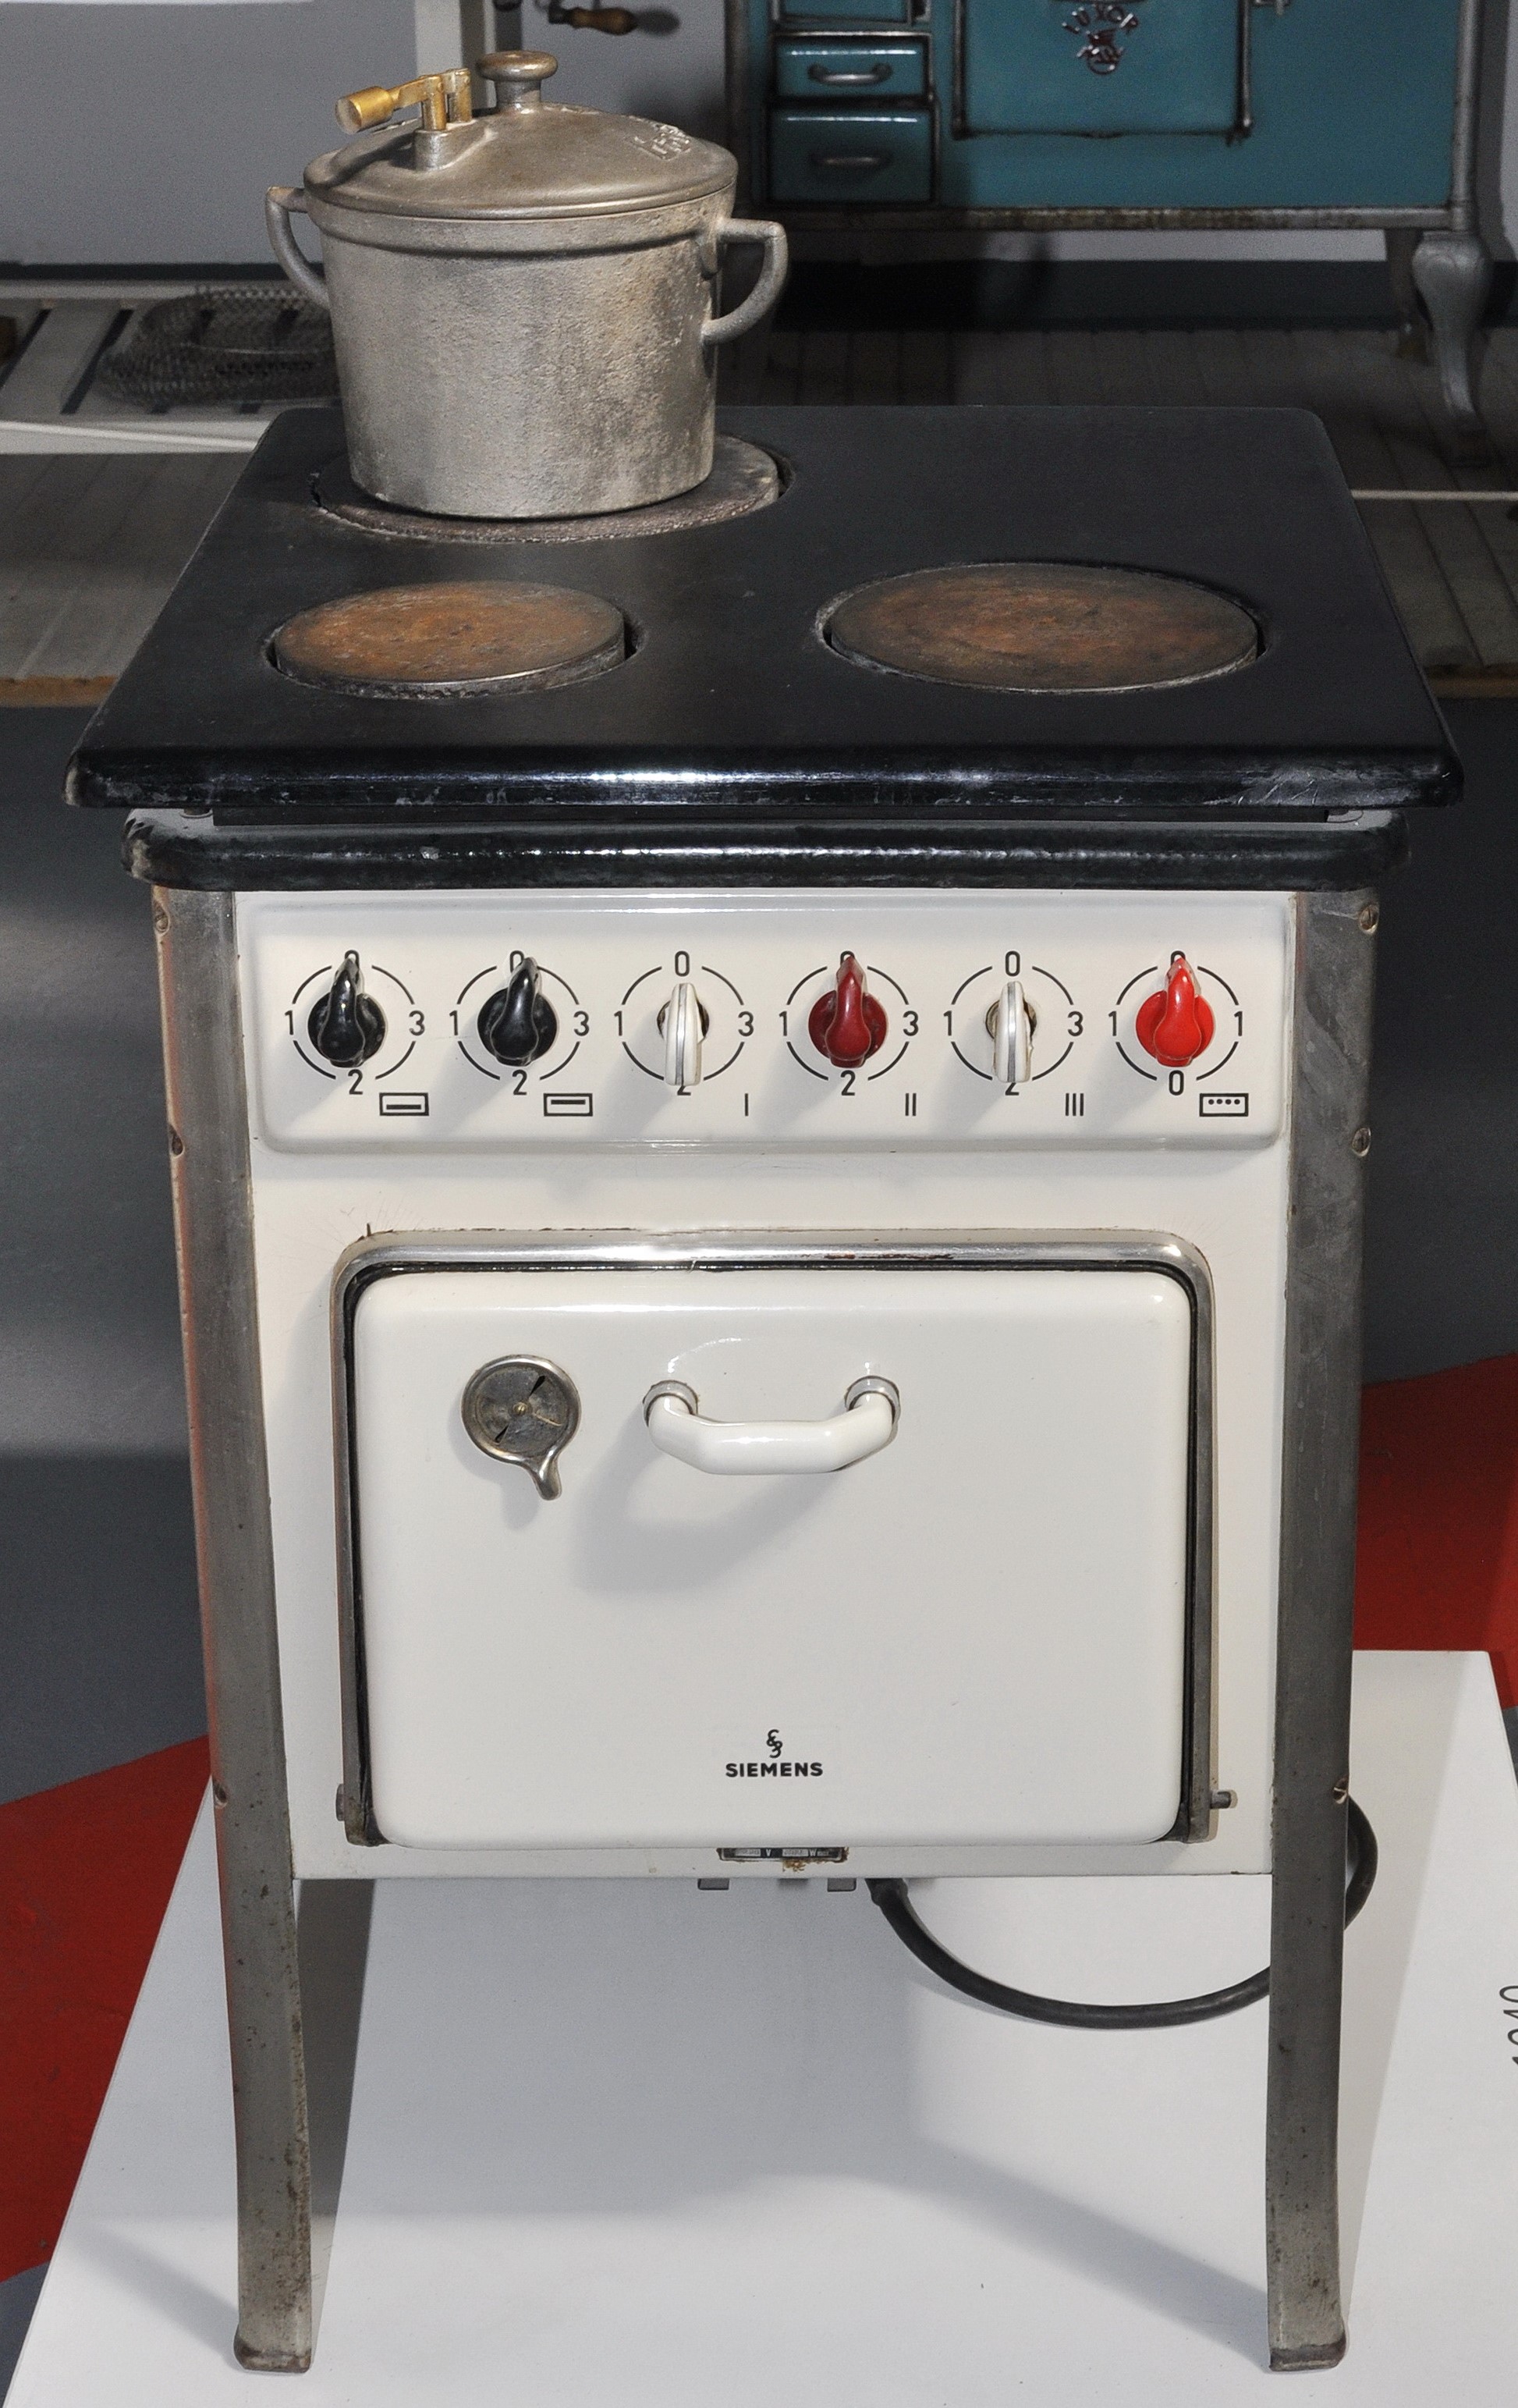 Electric stove - Wikipedia